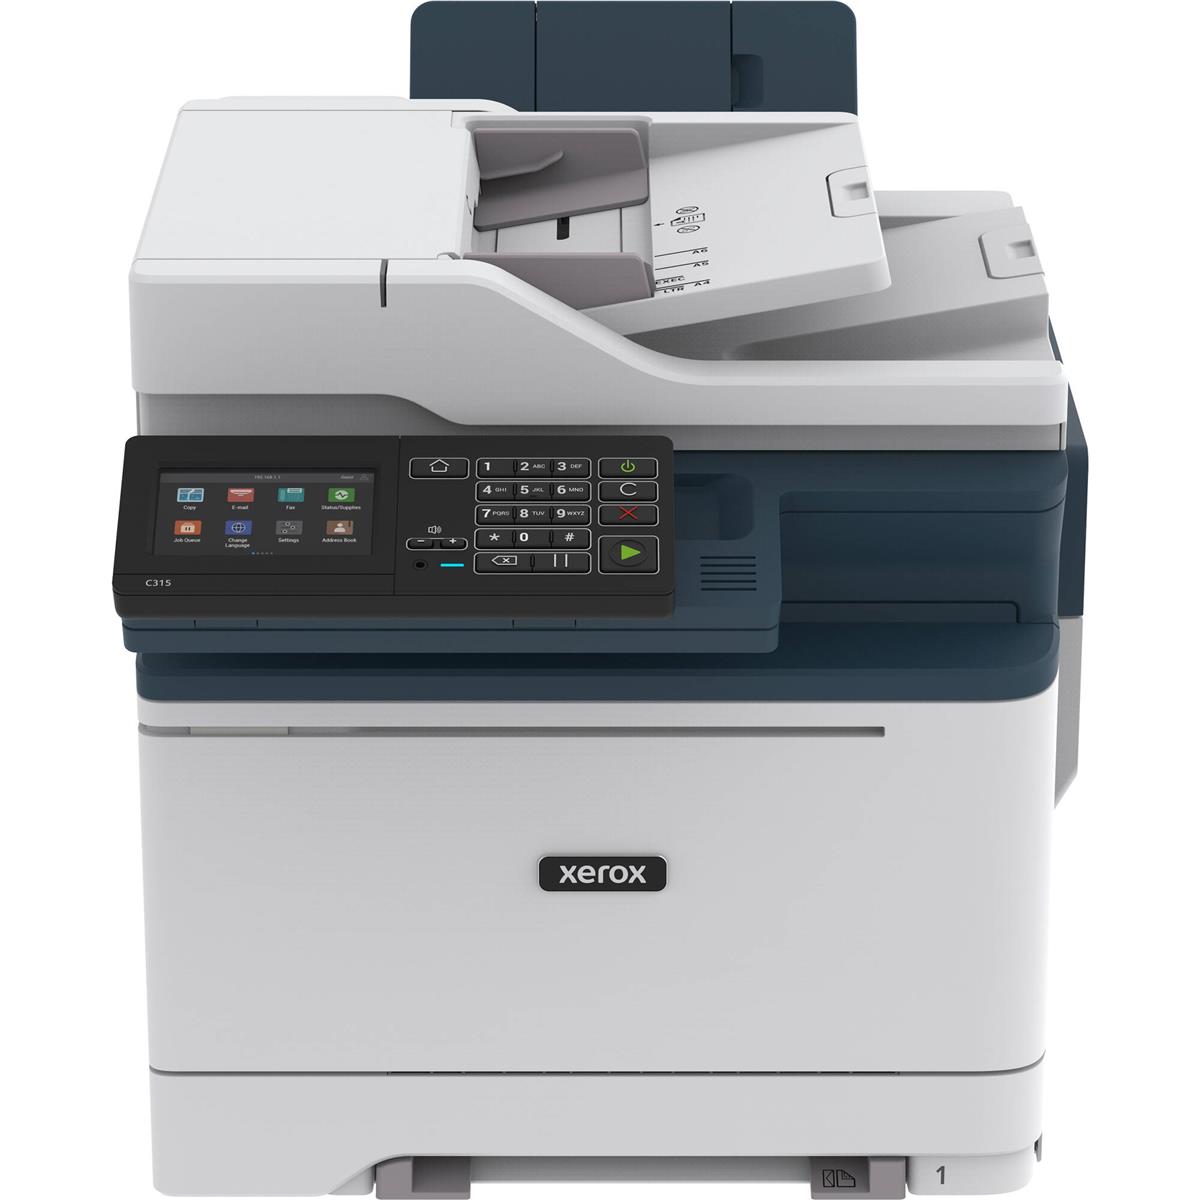 Image of Xerox C315 Wireless Duplex Multifunction Color Laser Printer